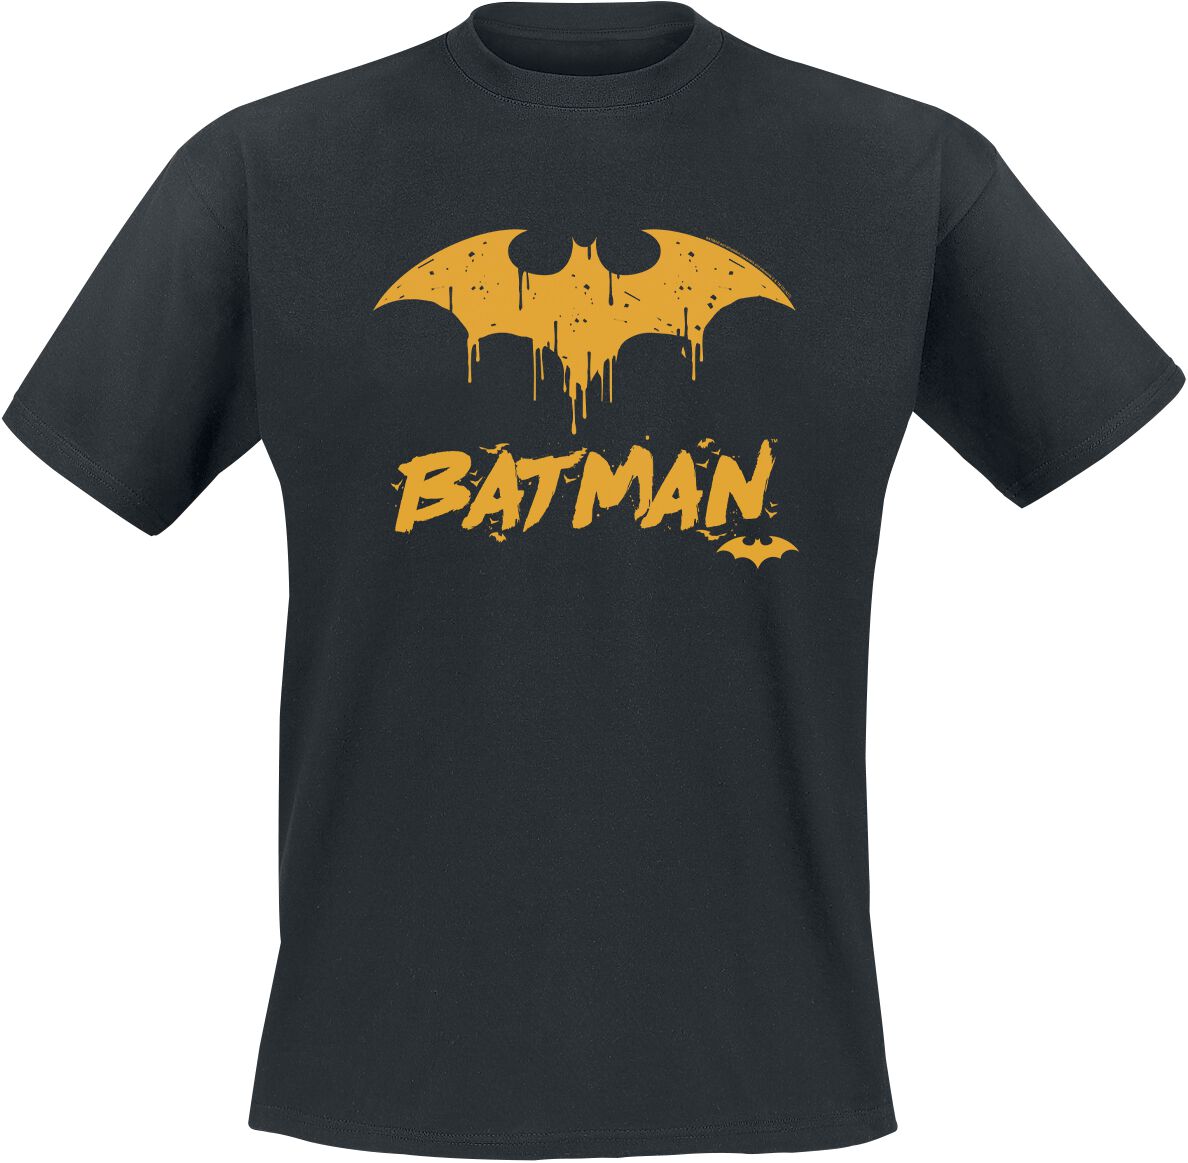 Batman Bat drip T-Shirt black